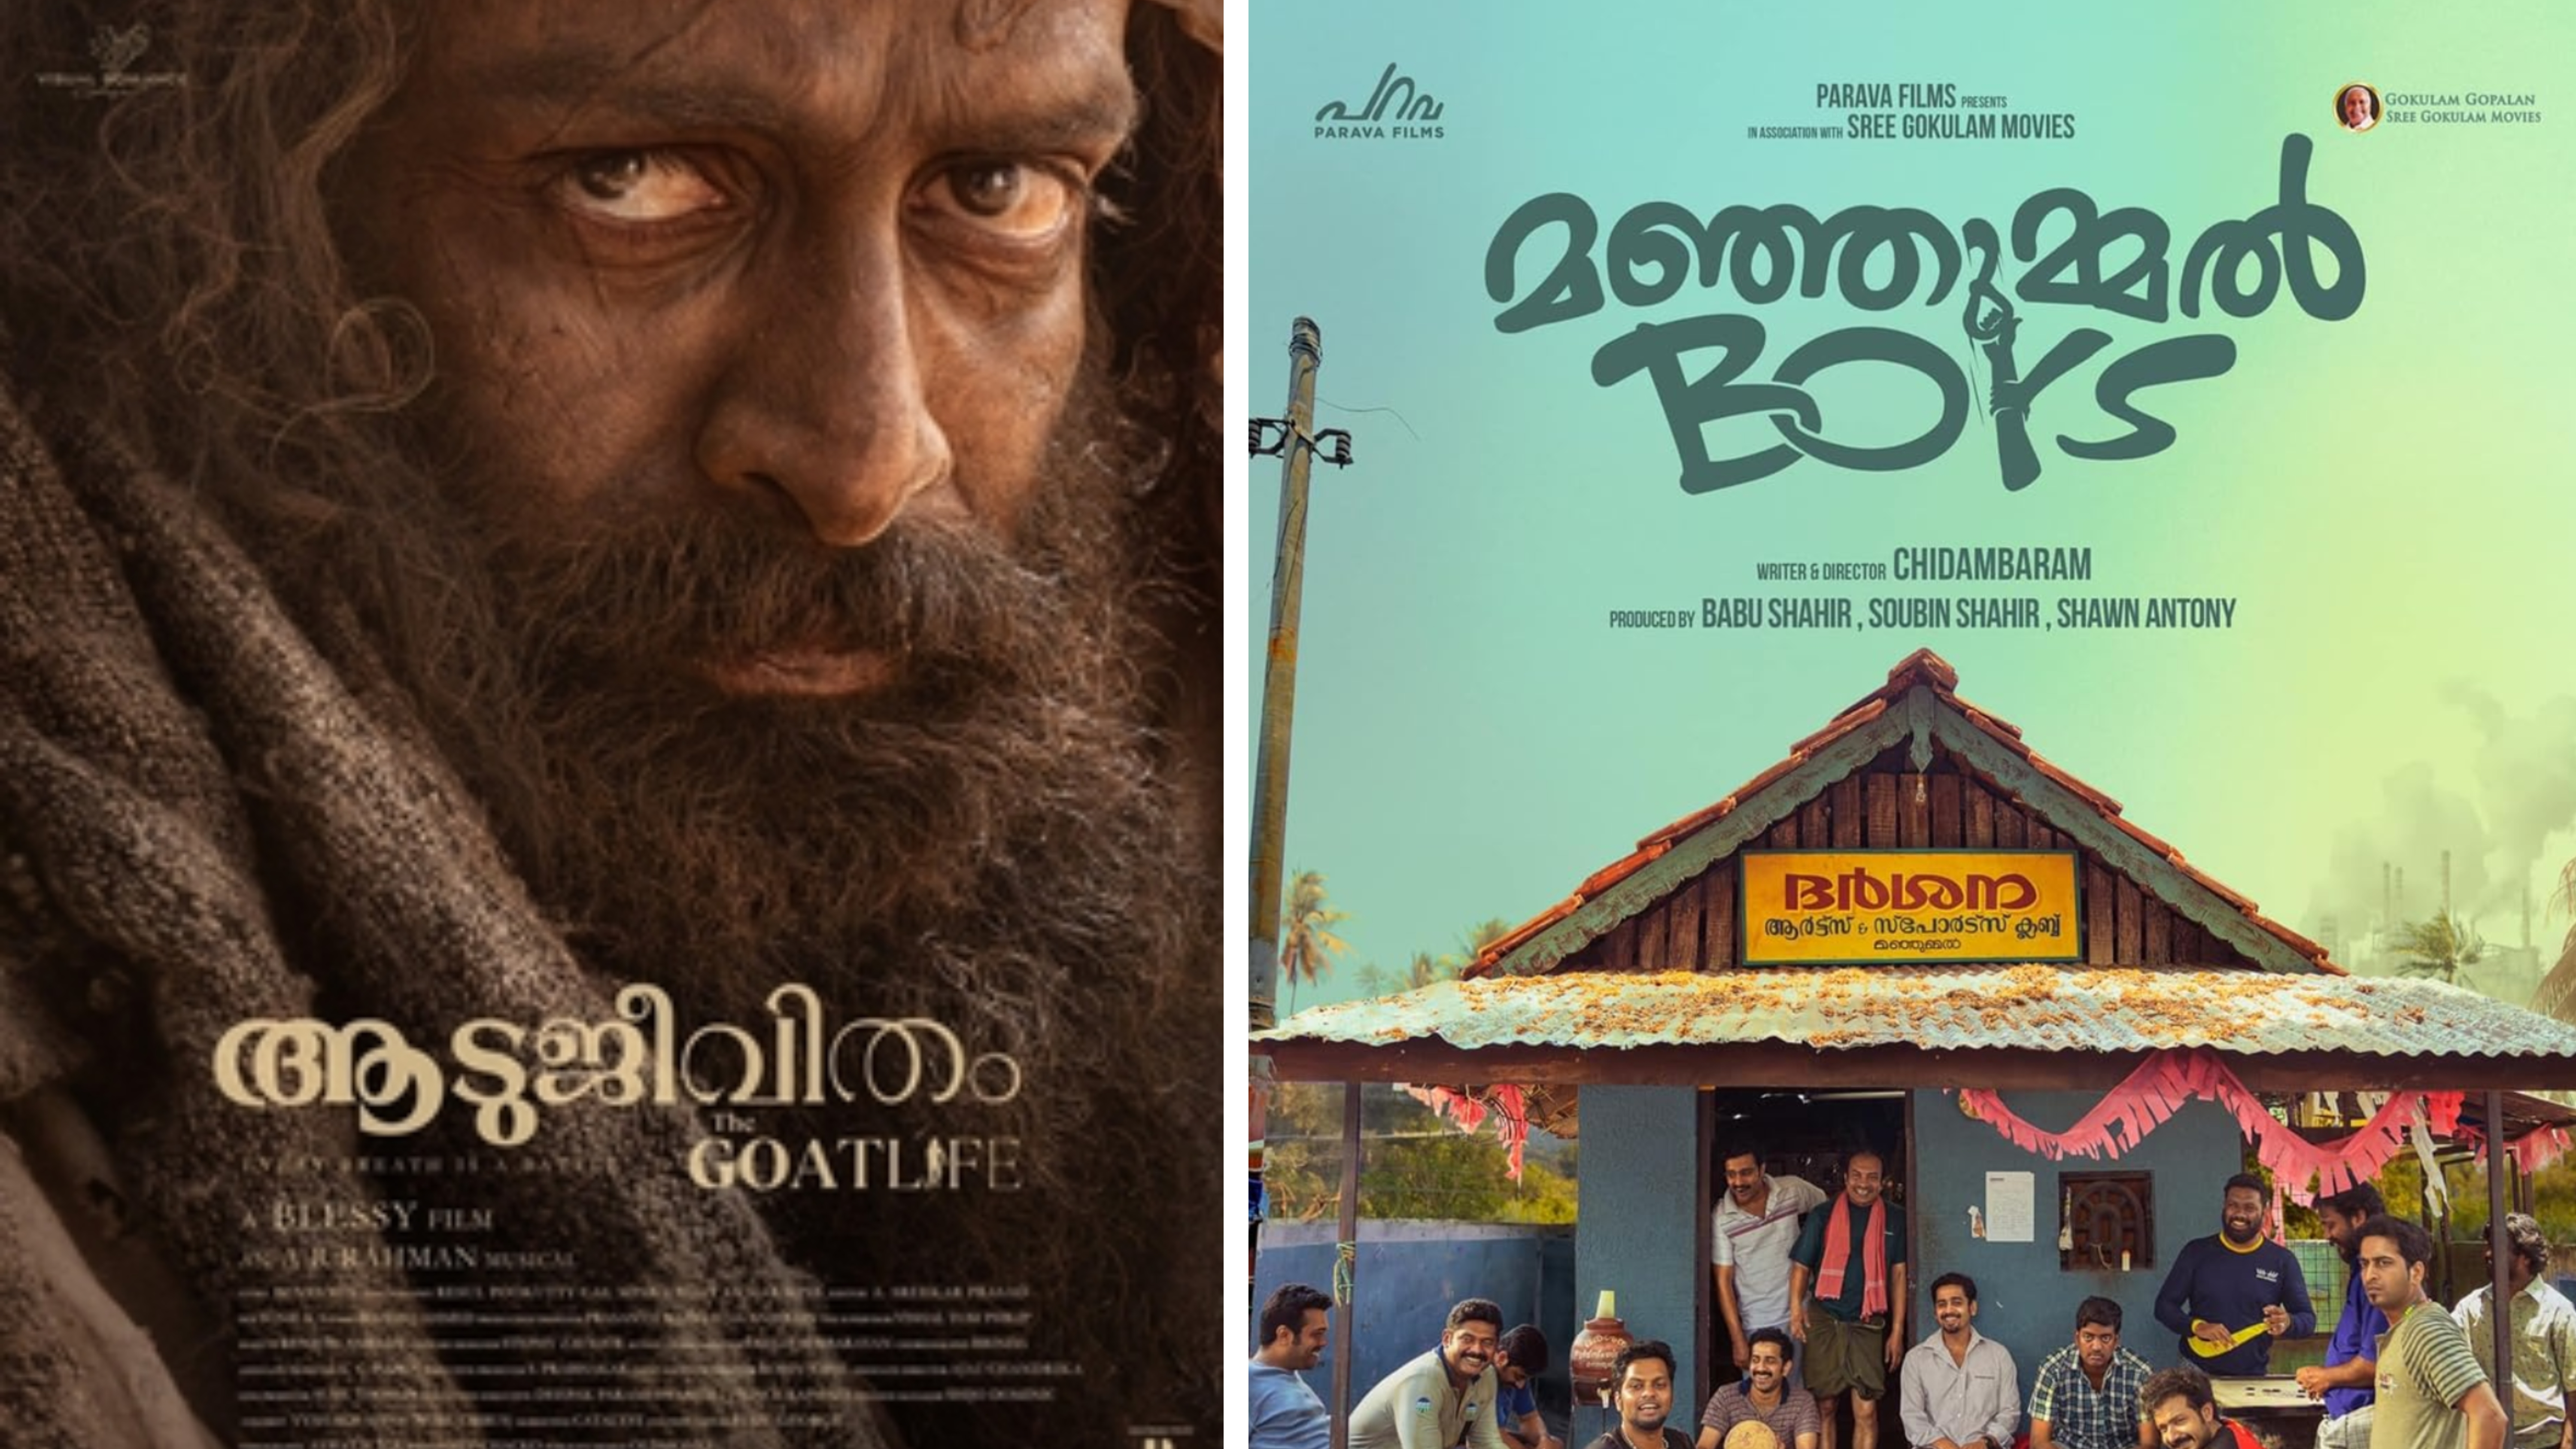 Malayalam films beat Bollywood at New Zealand box office